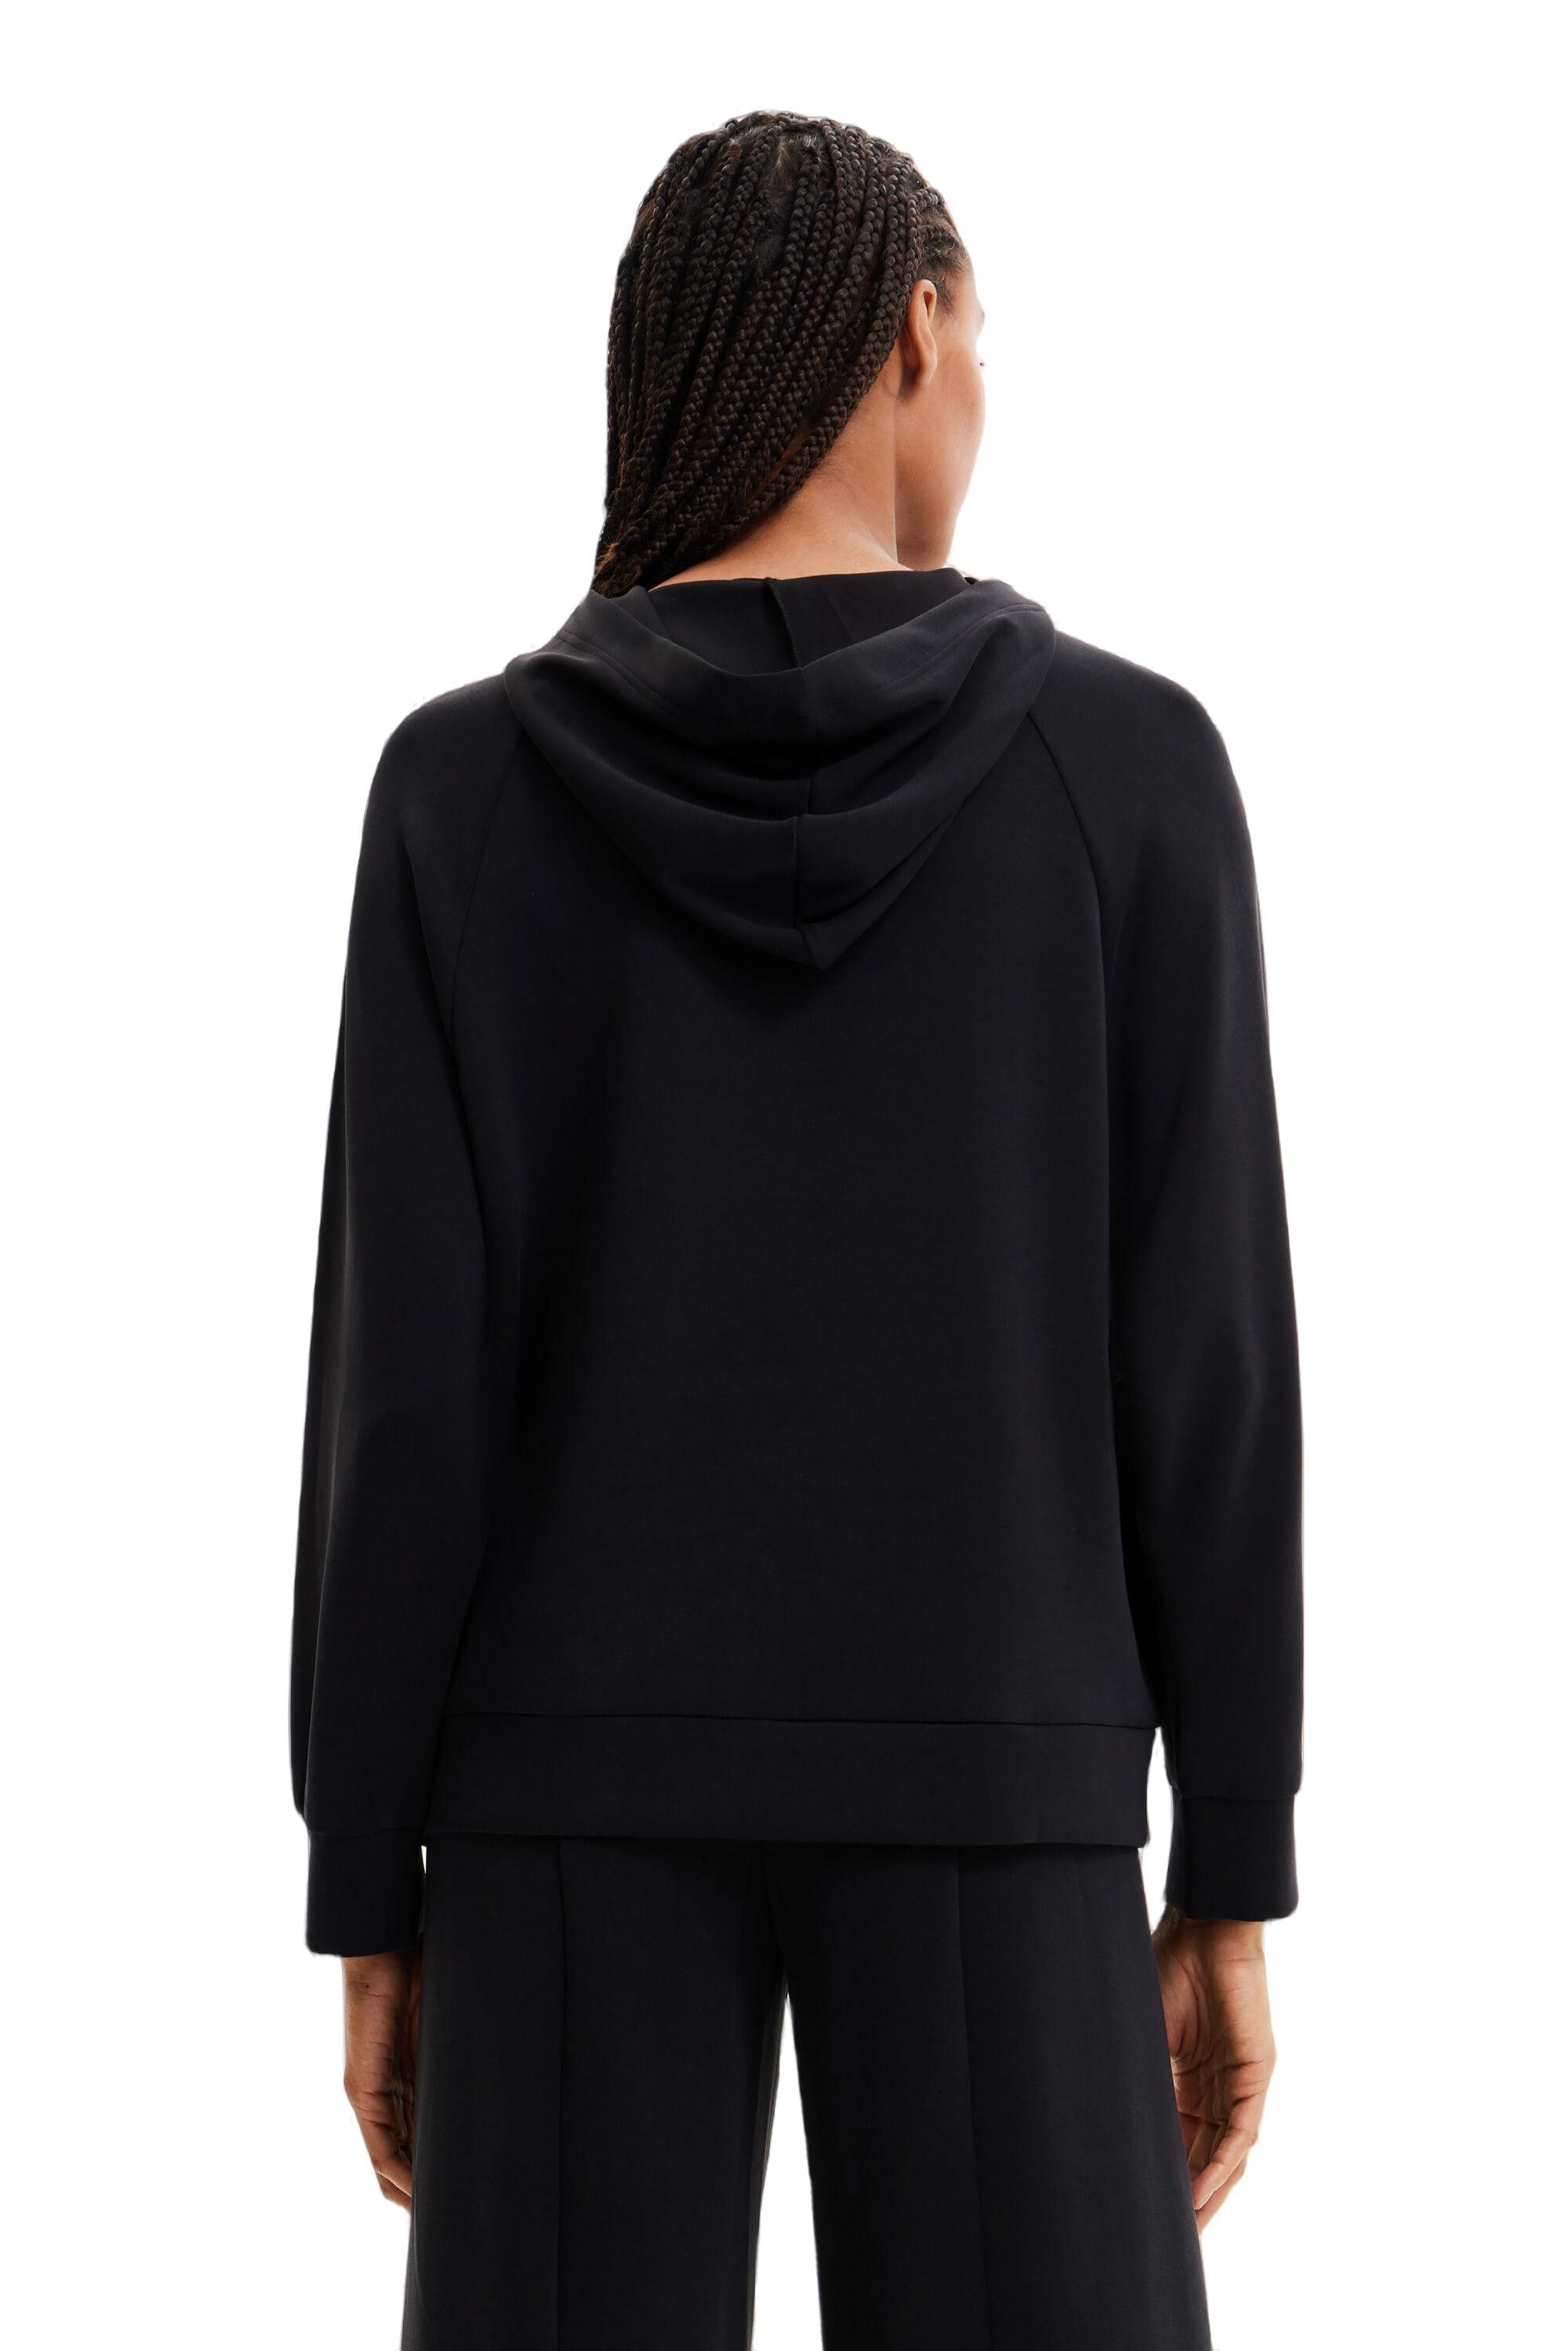 Brand: Desigual   Gender: Women   Type: Sweatshirts   Color: Black   Pattern: Print   Sleeves: Long Sleeve   Collar: Hood   Pockets: Front Pockets   Season: Fall/winter